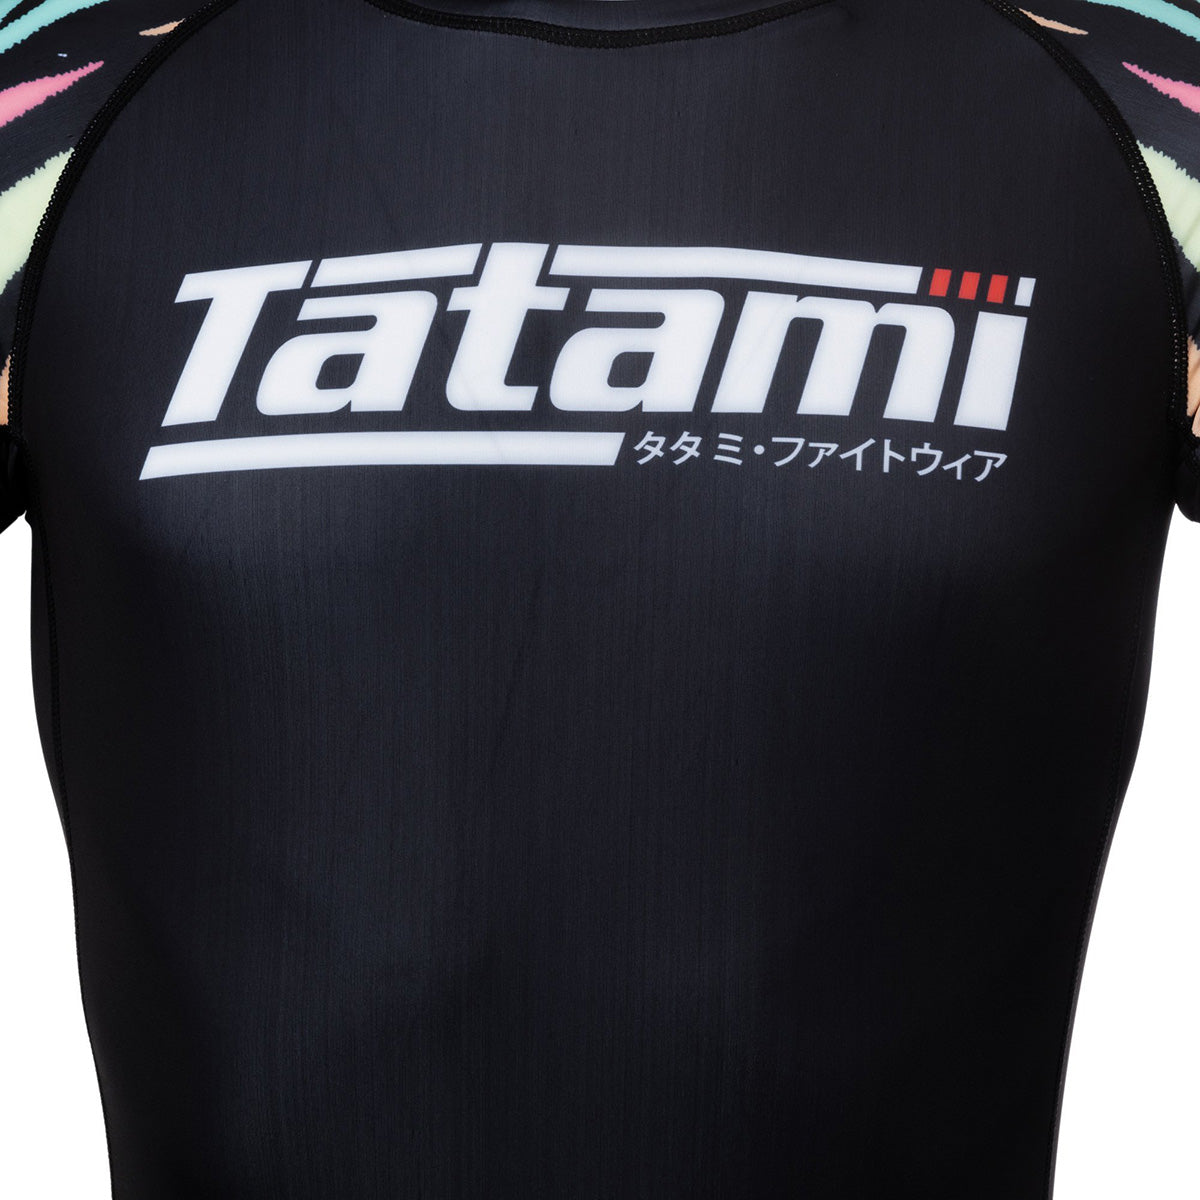 Tatami Fightwear Recharge Short Sleeve Rashguard - Neon Tatami Fightwear